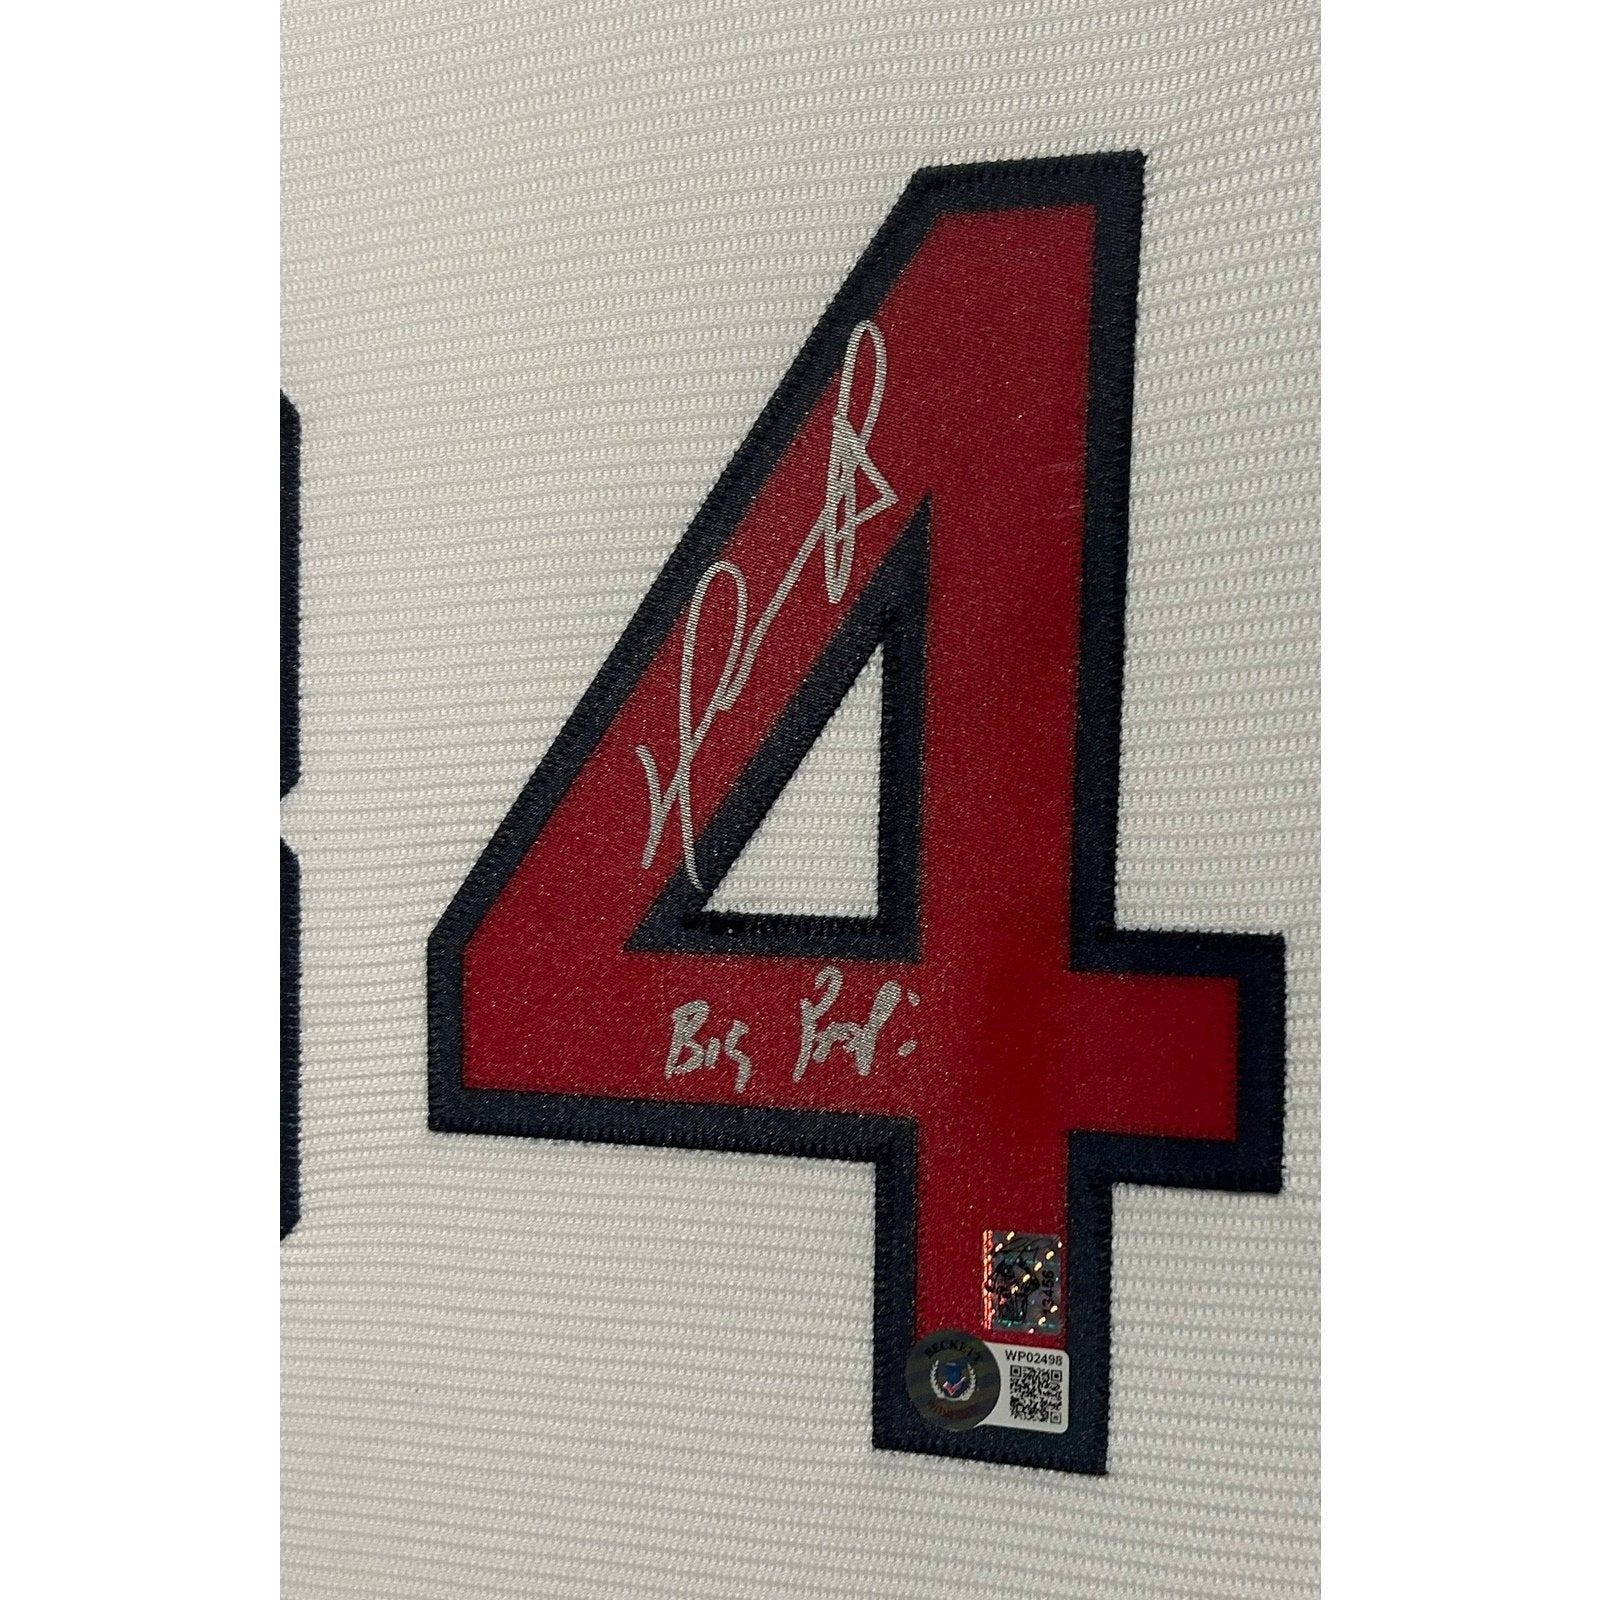 Lids David Ortiz Boston Red Sox Fanatics Authentic Autographed 16 x 20  Swinging Photograph with HOF 22 Inscription